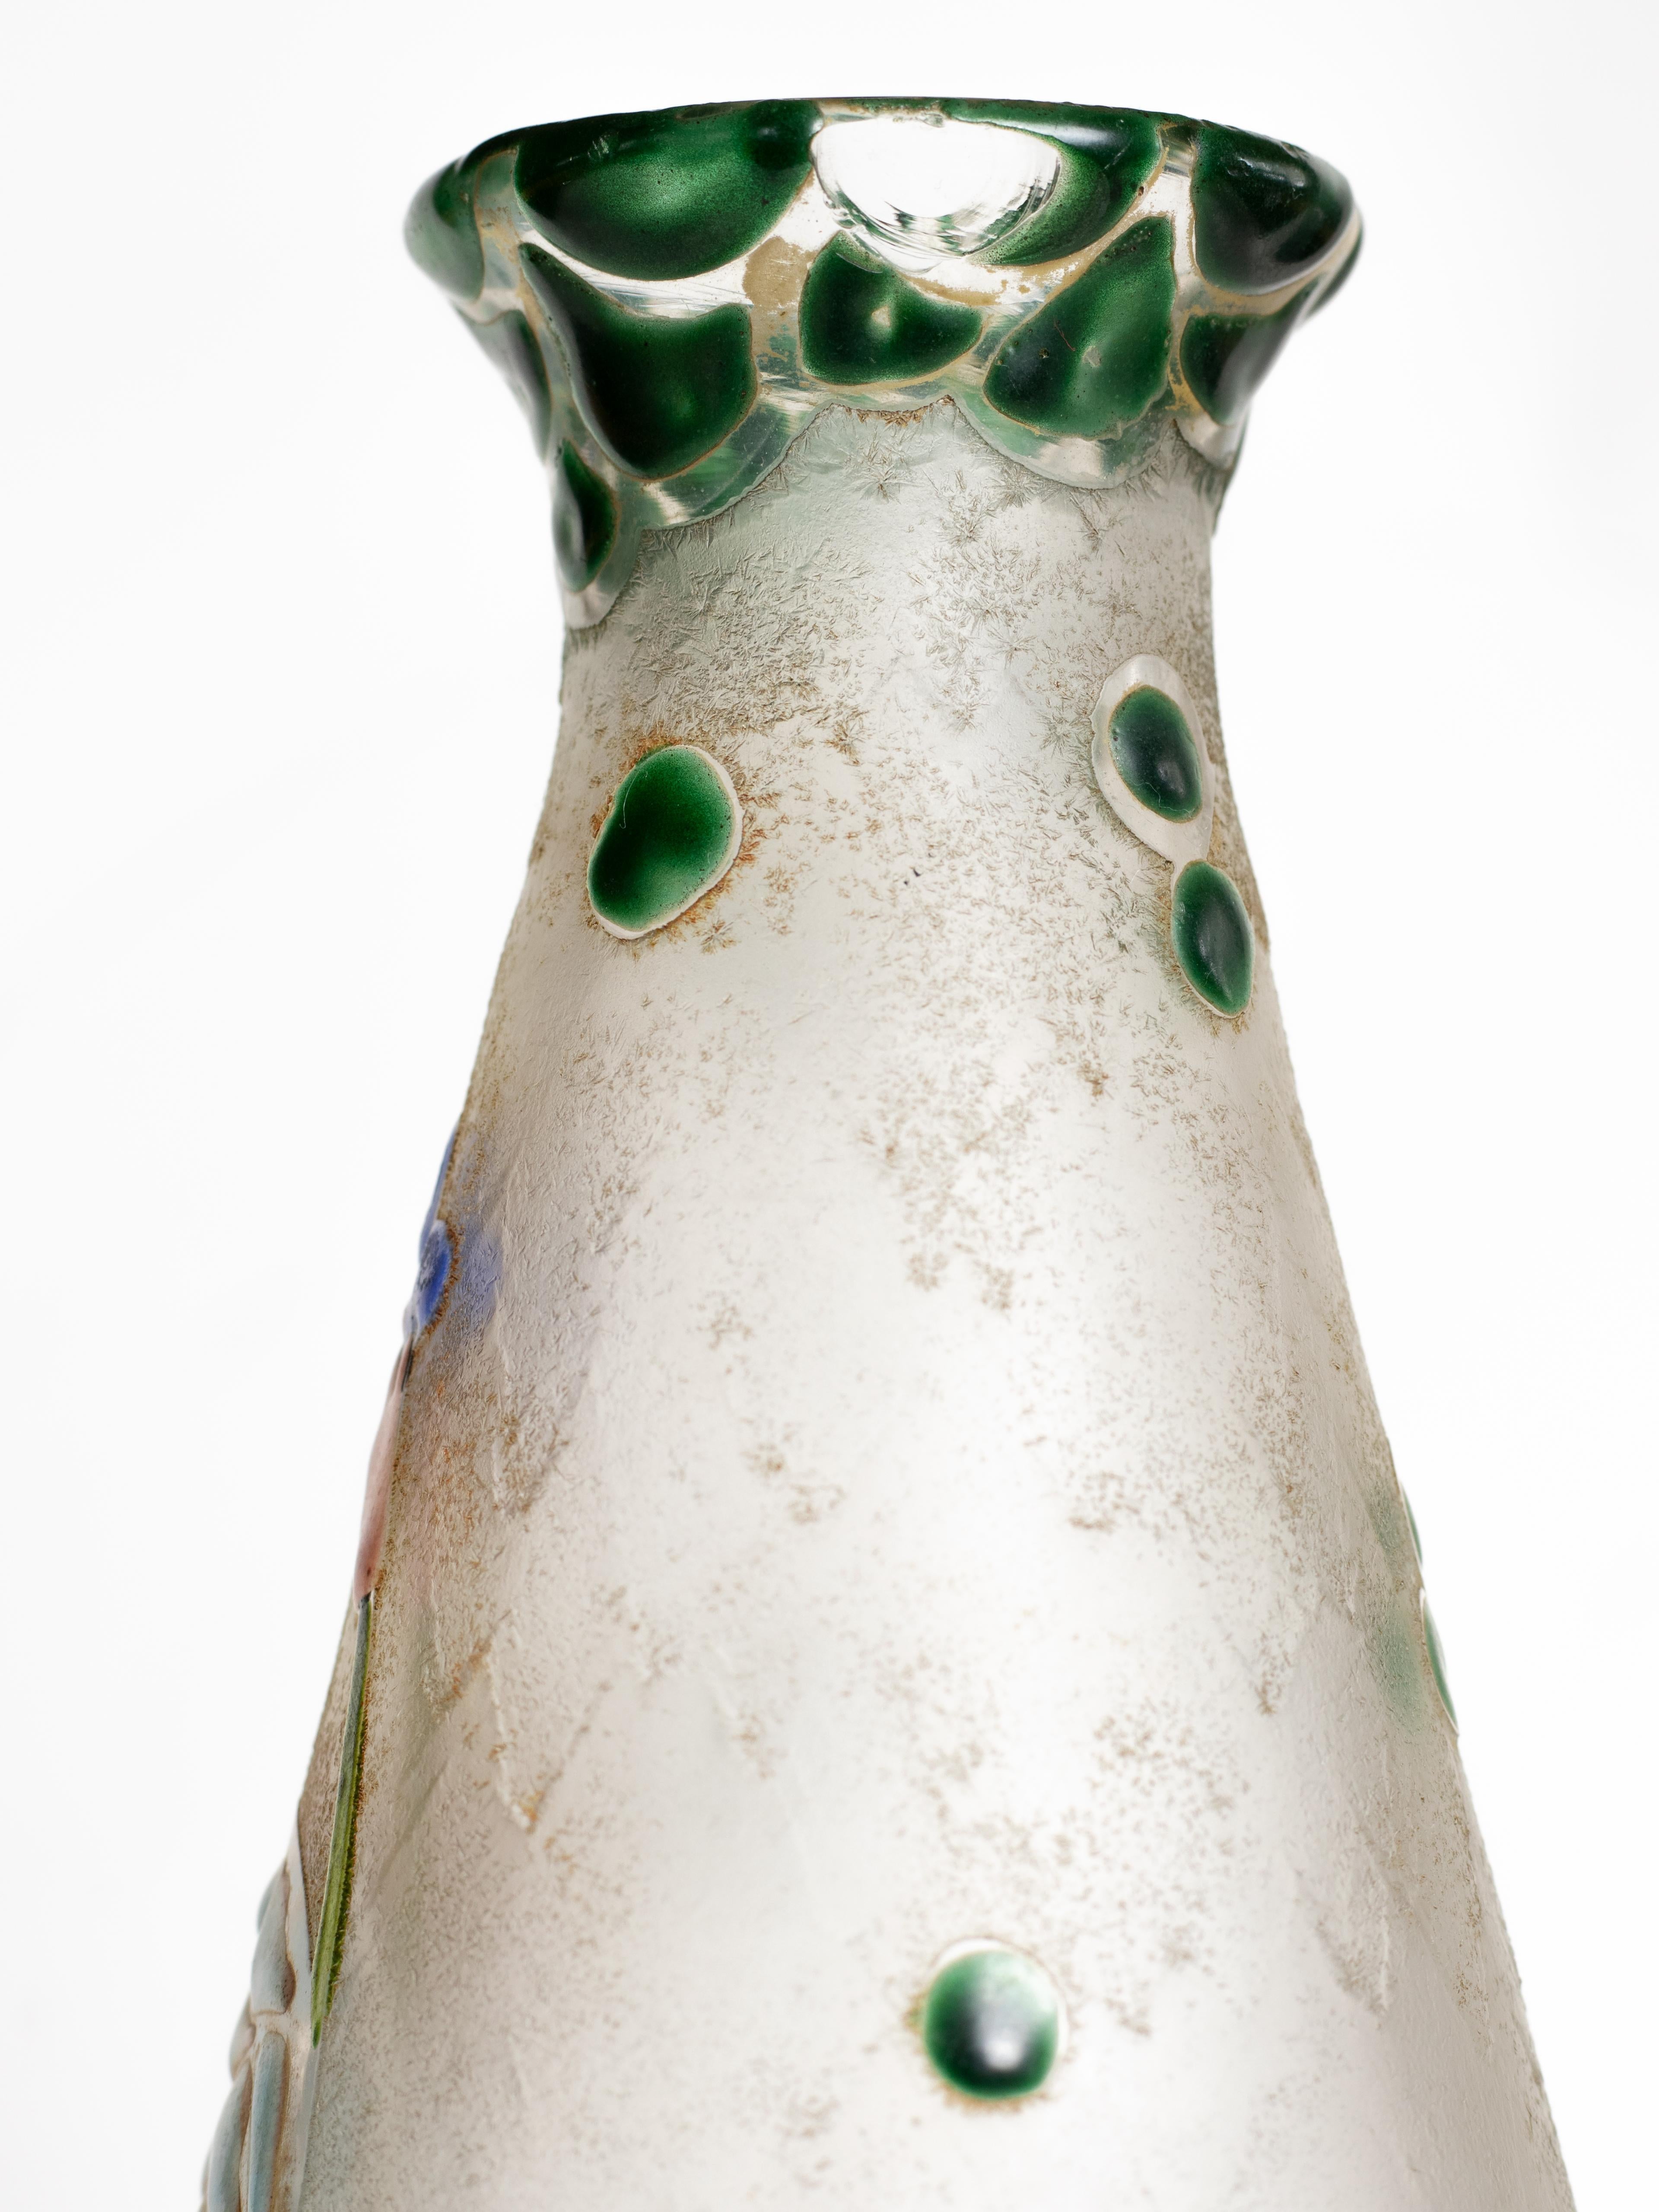  Legras Cameo Glass Vase by François-Théodore Legras, 20th Century For Sale 3